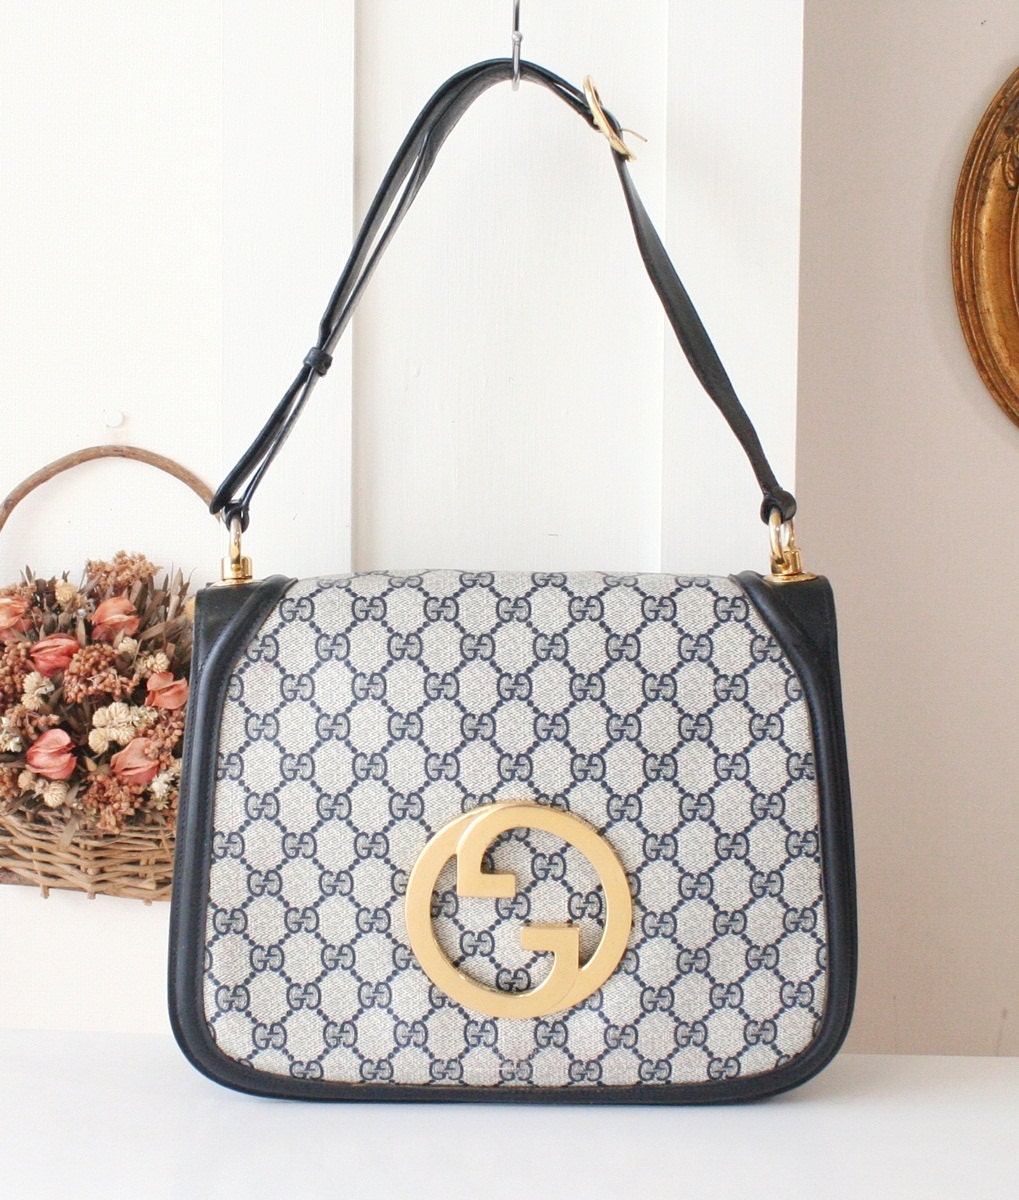 Trend Terpopuler Authentic Gucci Handbags, Tas Gucci